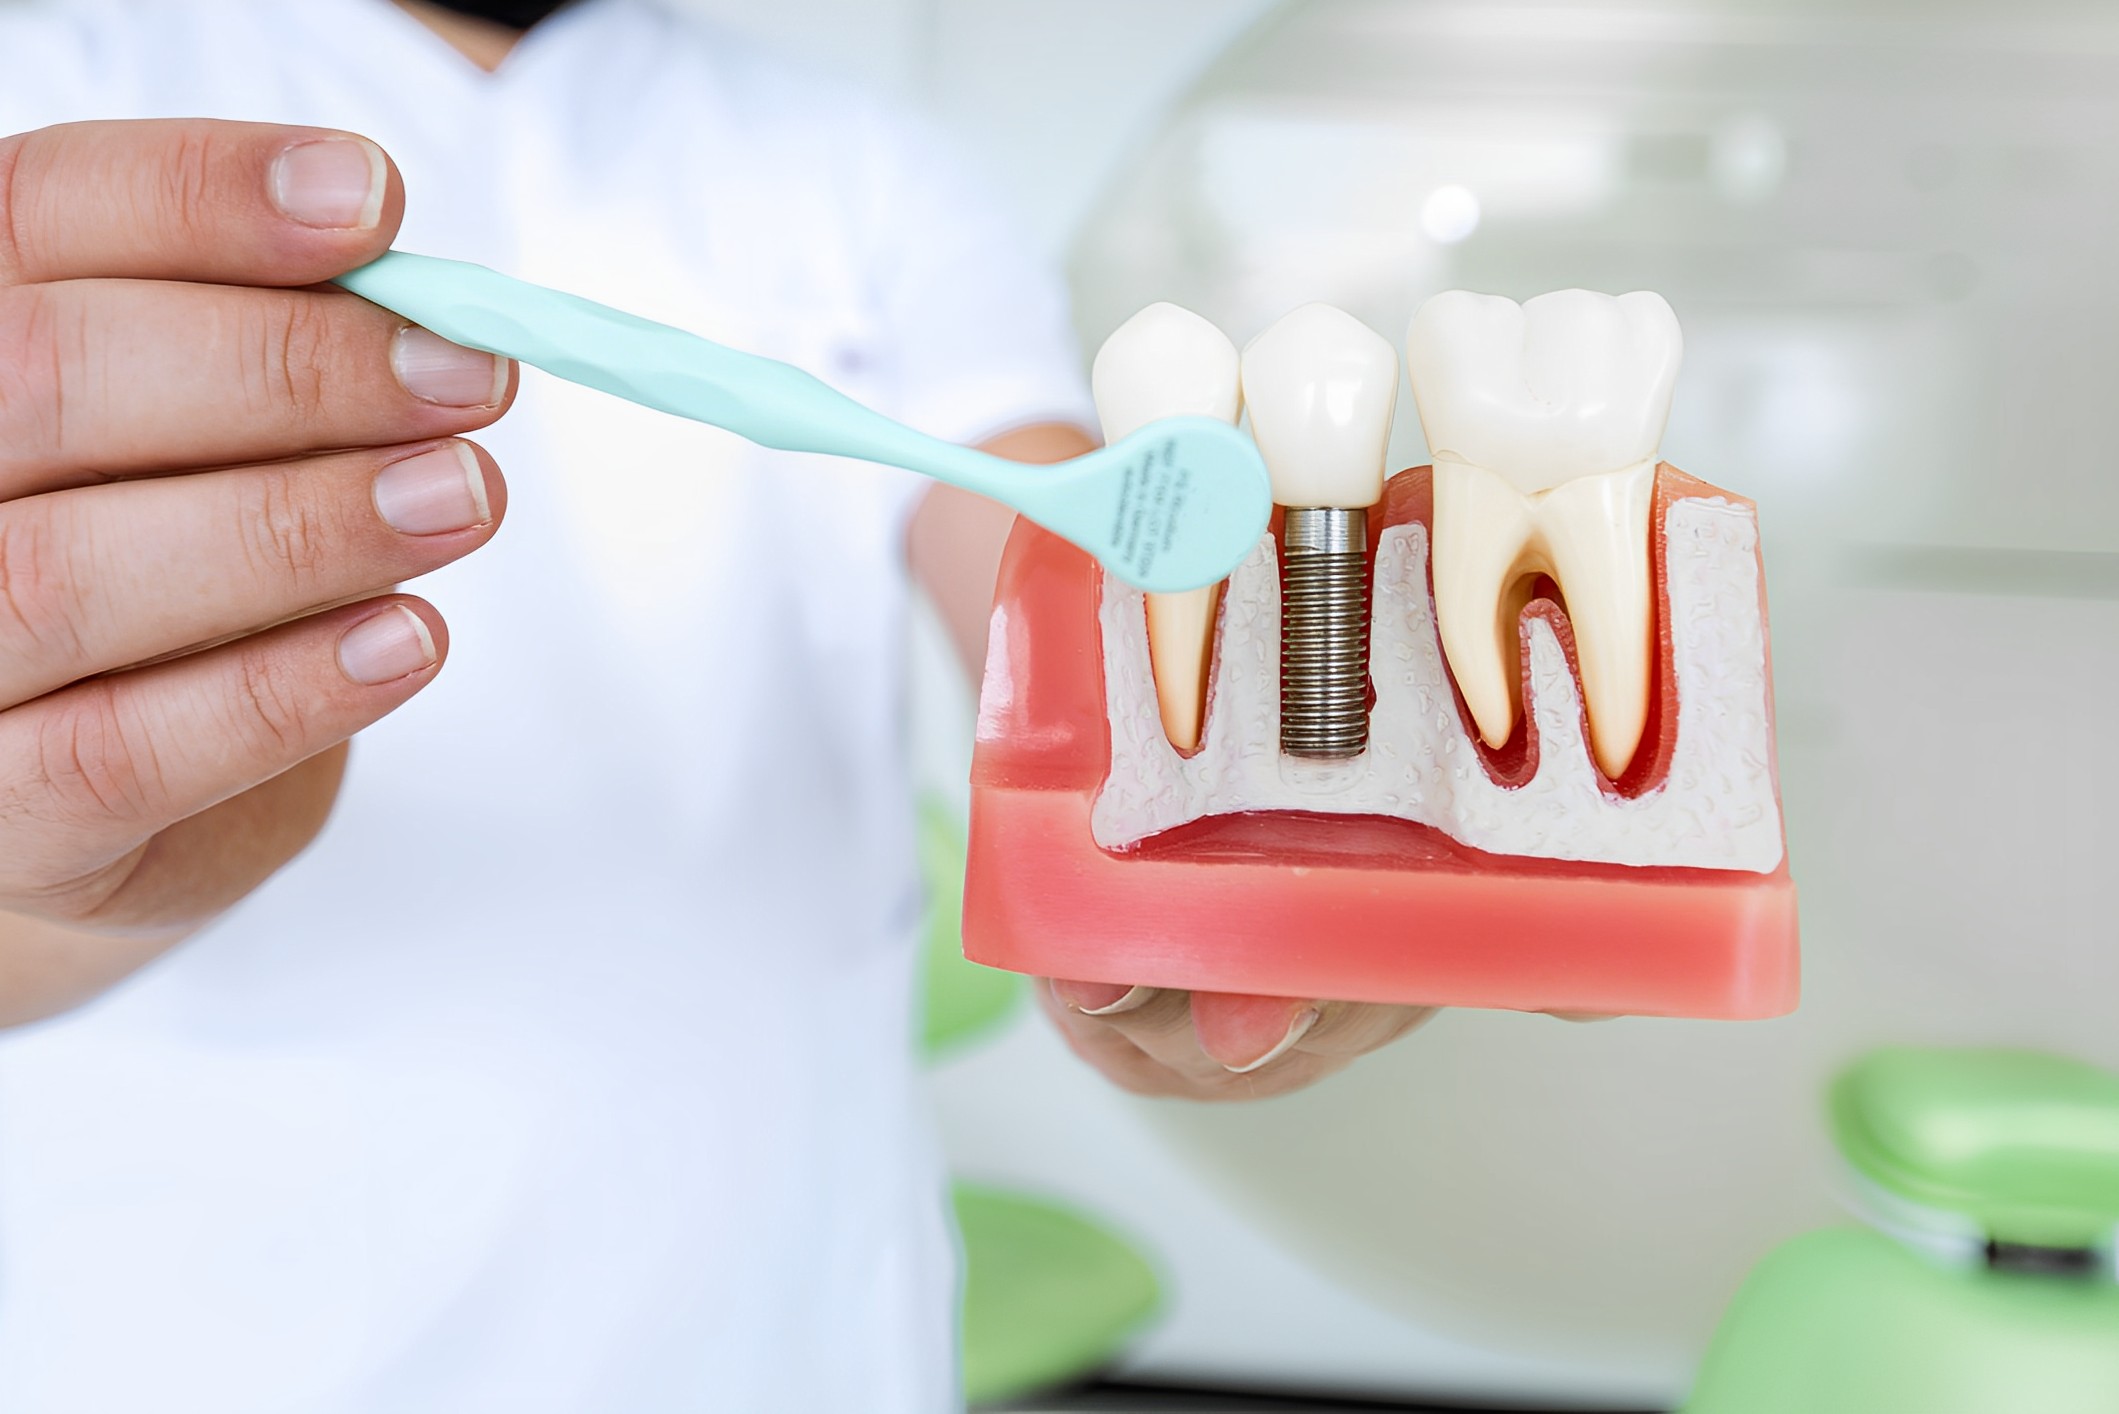 reconstructive dental procedures start with an examination at hampton dental associates in milwaukee, wi